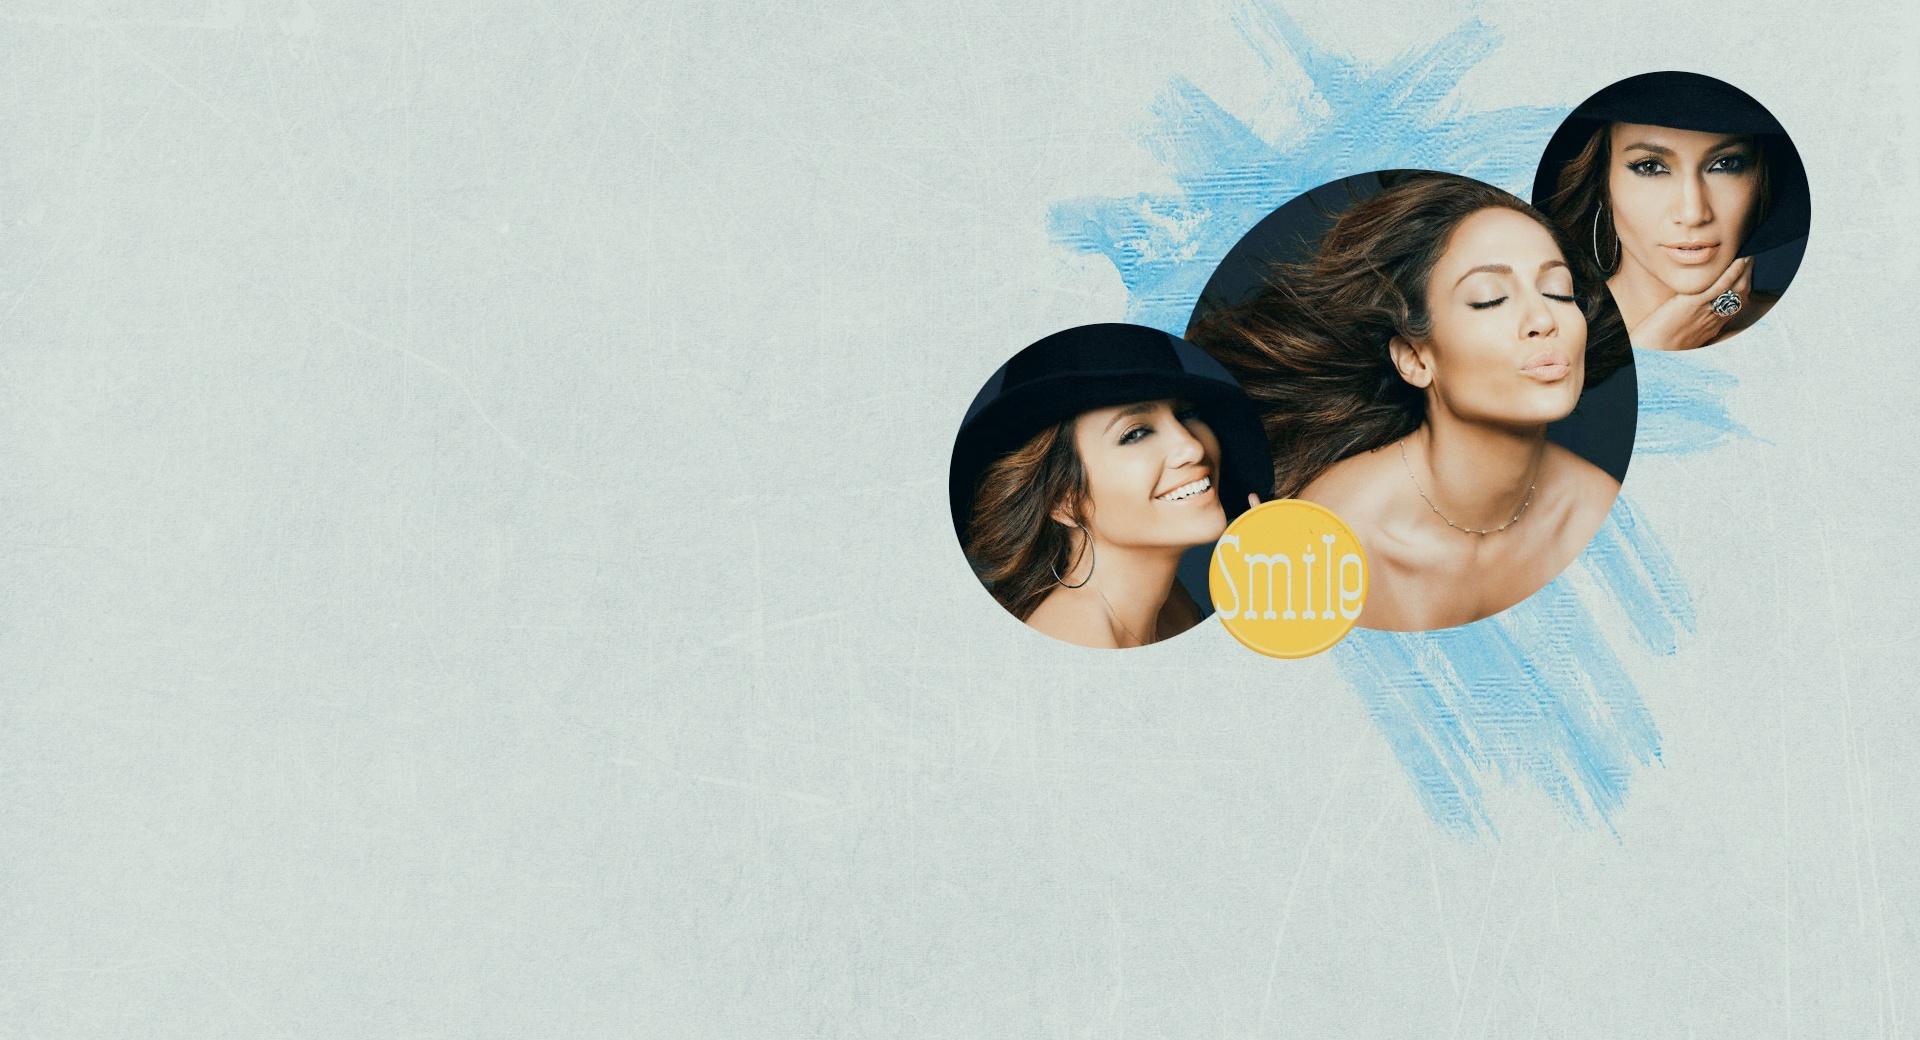 Jennifer Lopez Smile wallpapers HD quality